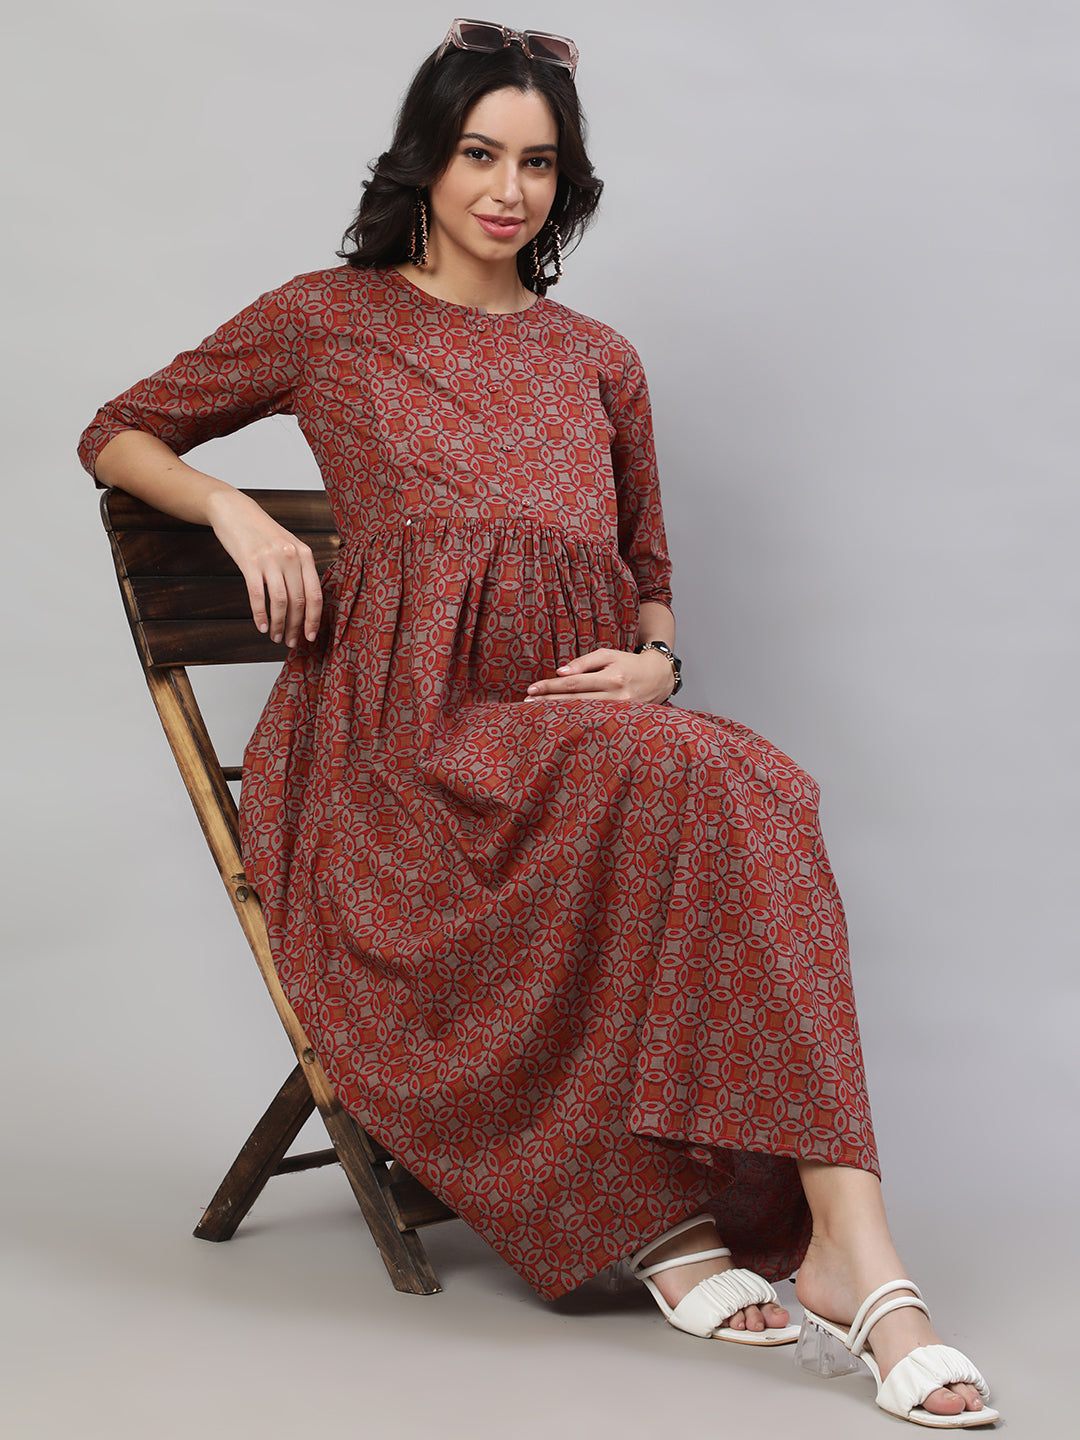 Women's Rust Printed Flared Maternity Dress - Nayo Clothing